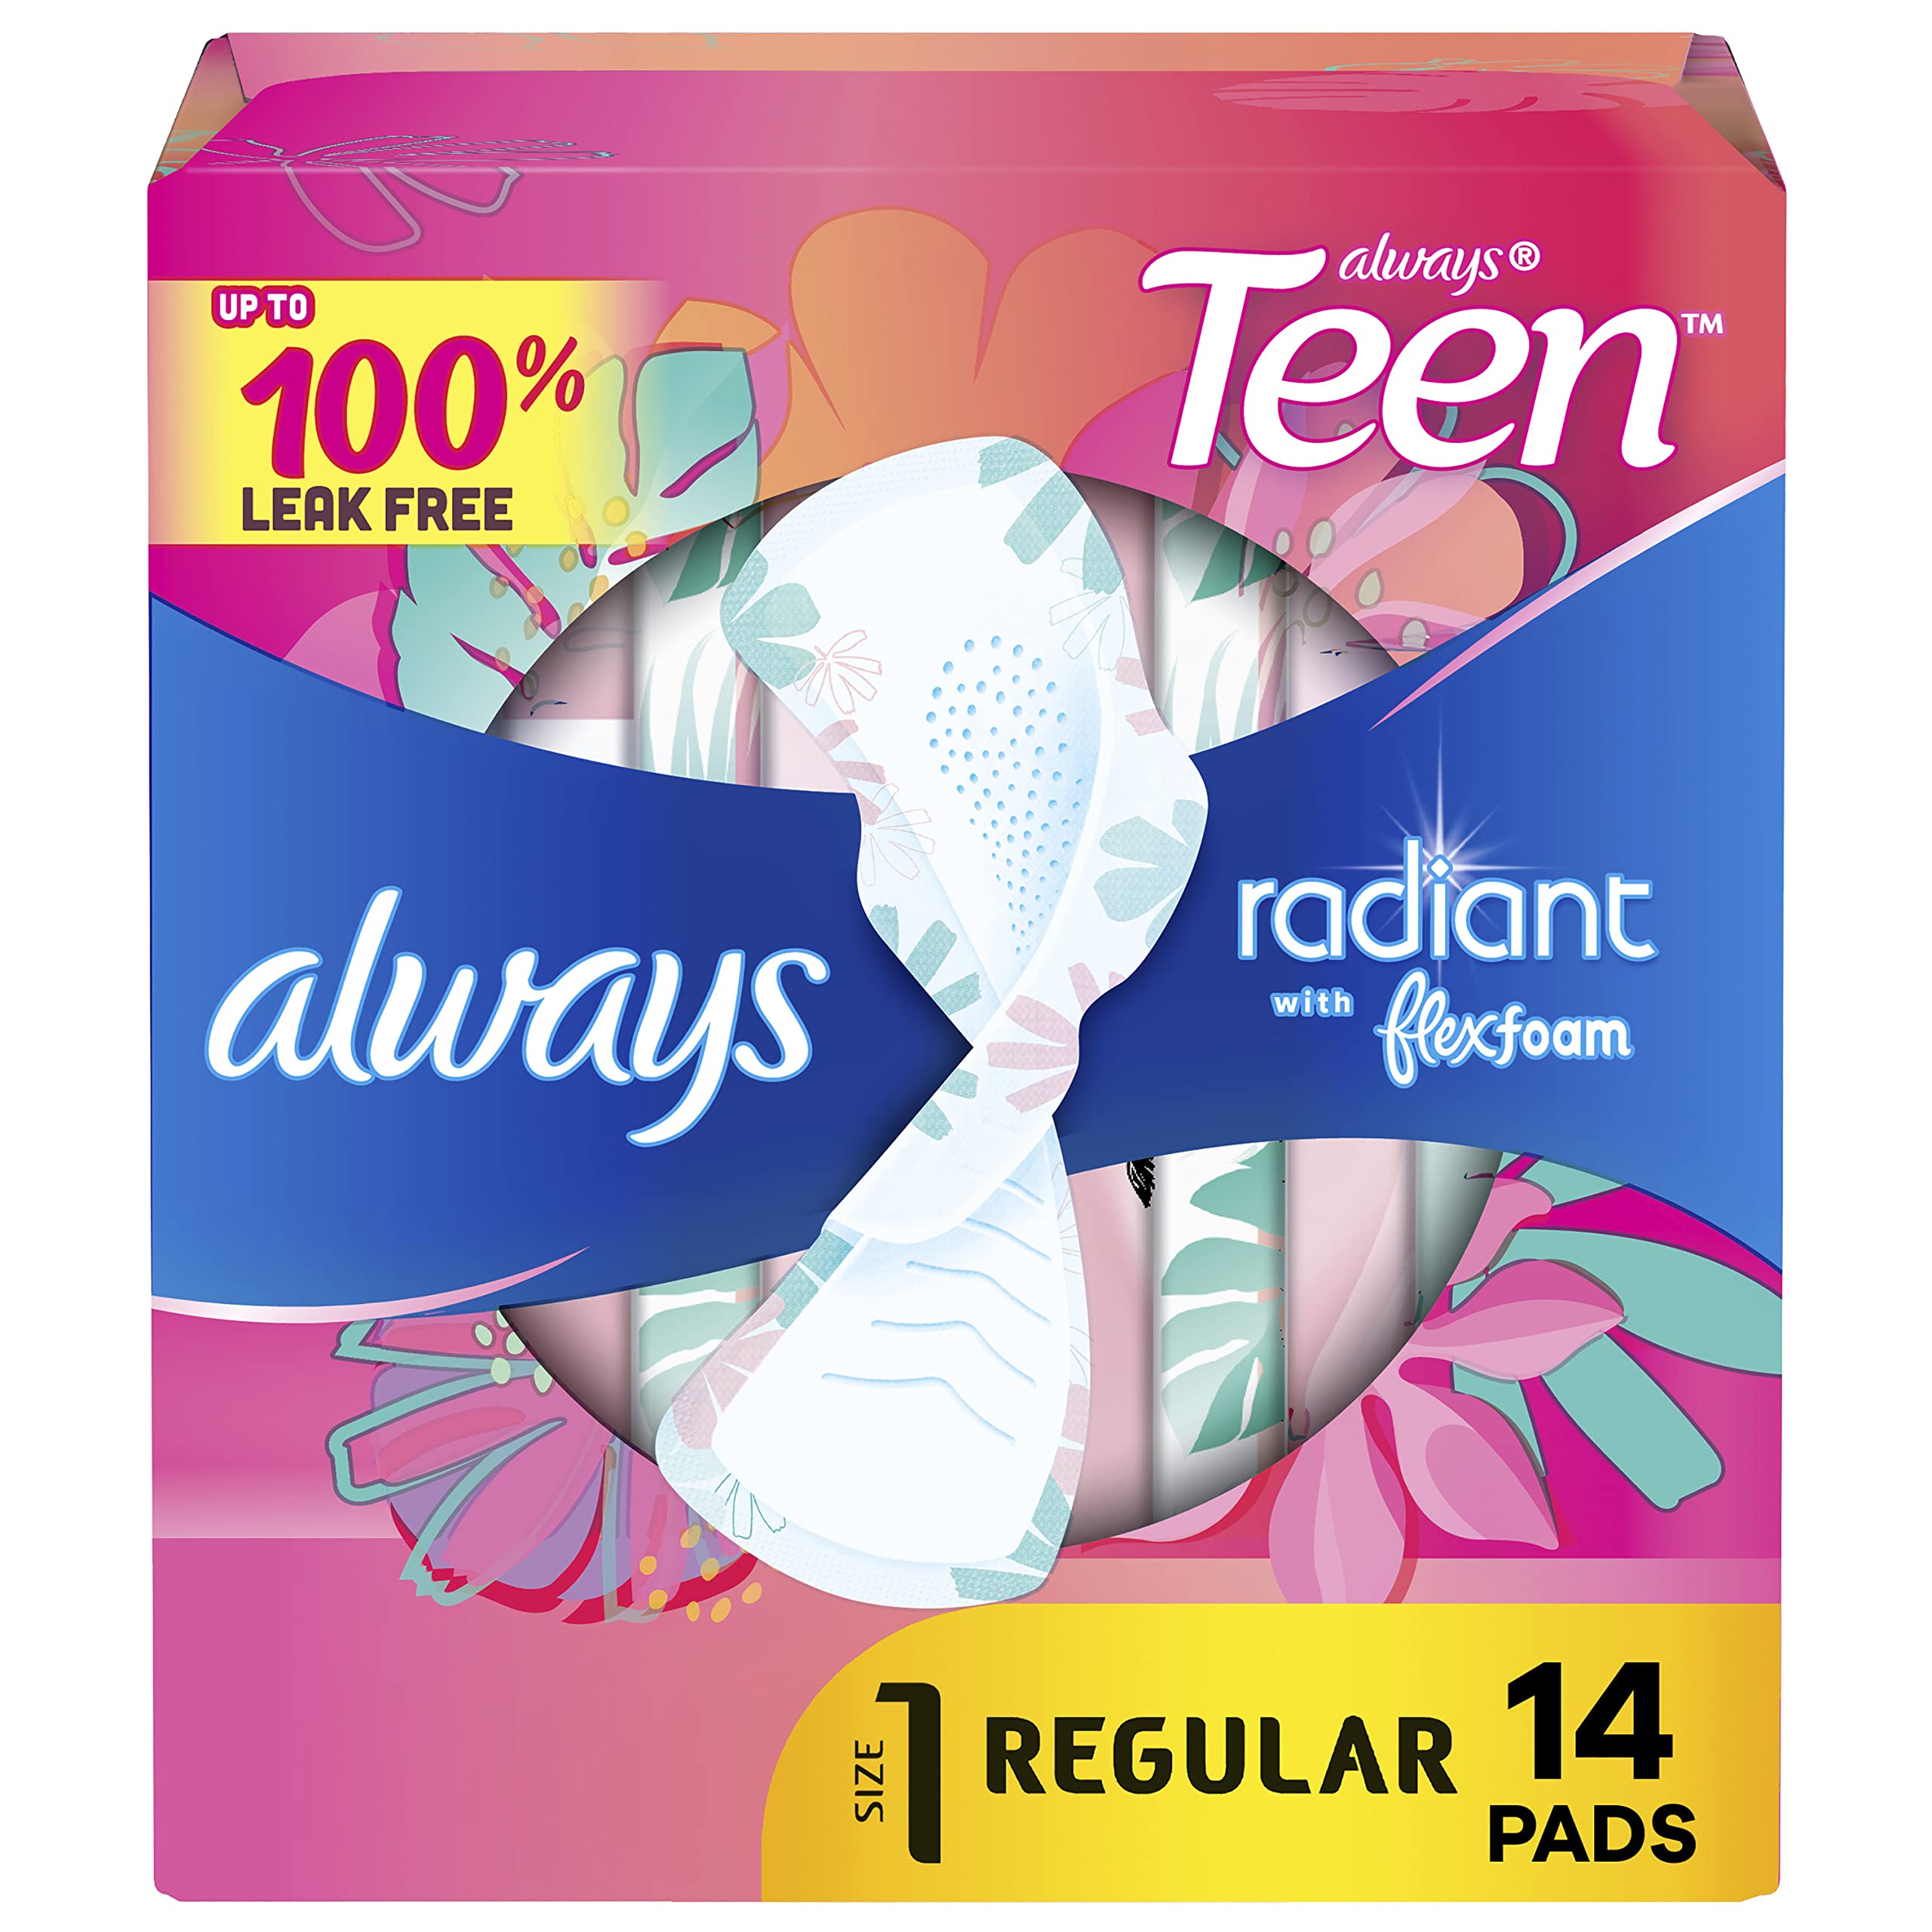 14-Count Always Teen Radiant w/ Flexfoam Feminine Pads (Size 1) $3 w/ S&S + Free Shipping w/ Prime or on $25+